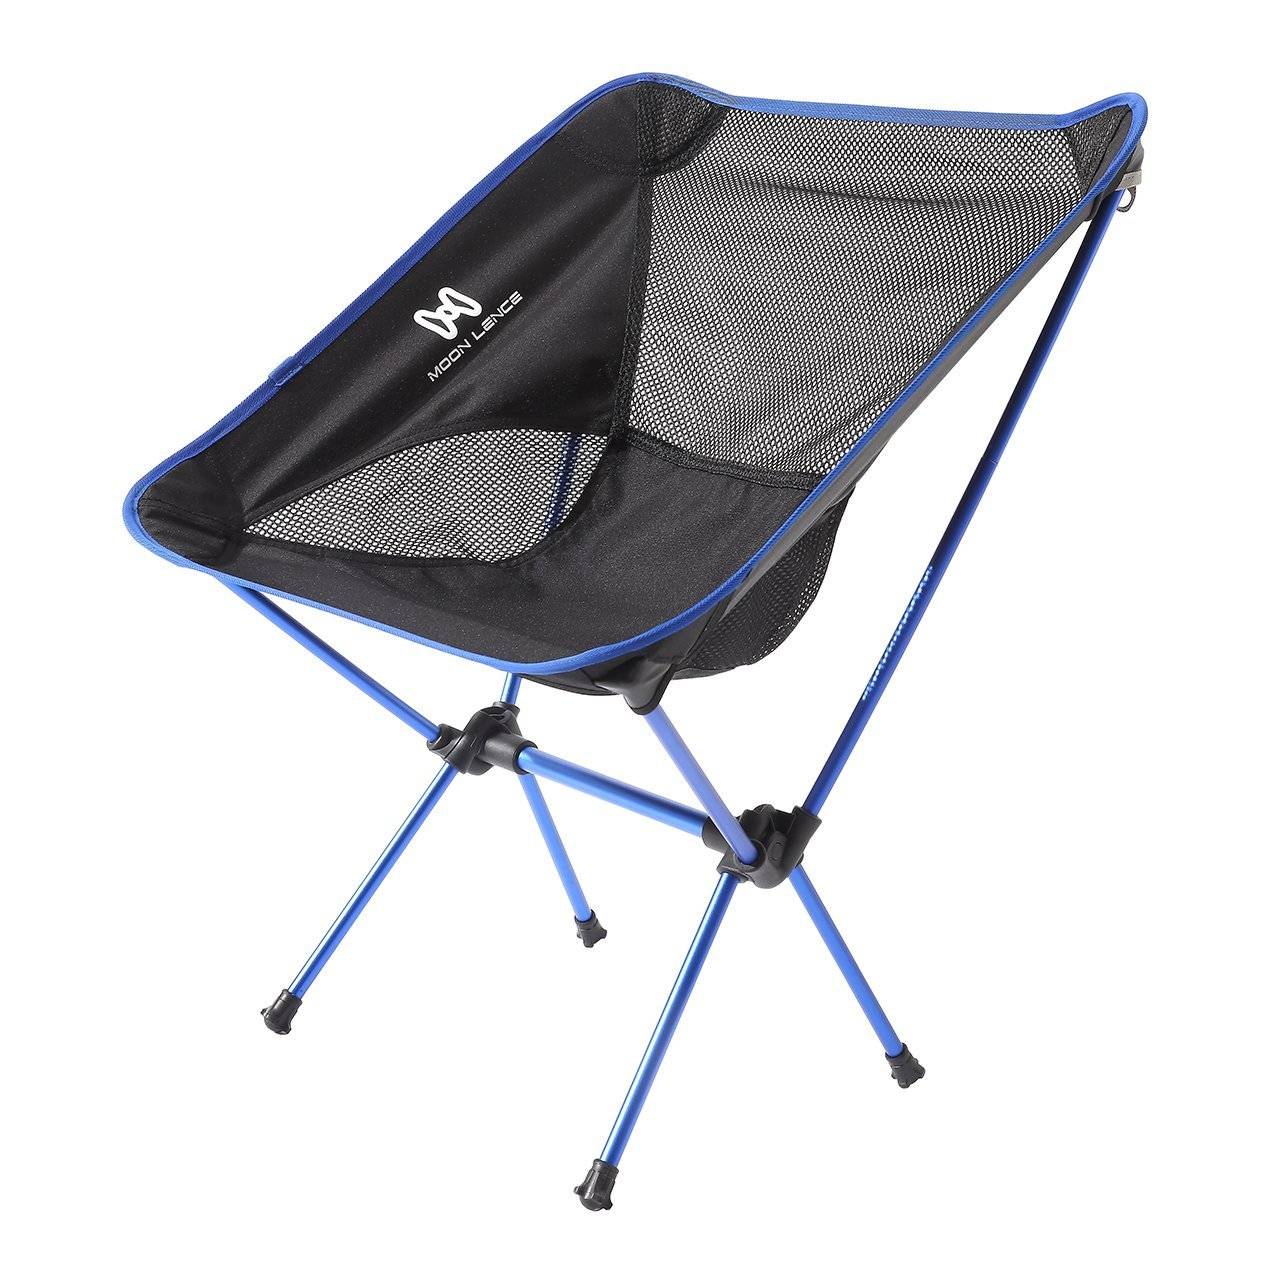 Moon Lence Ultralight Portable Folding Chair with Carry Bag